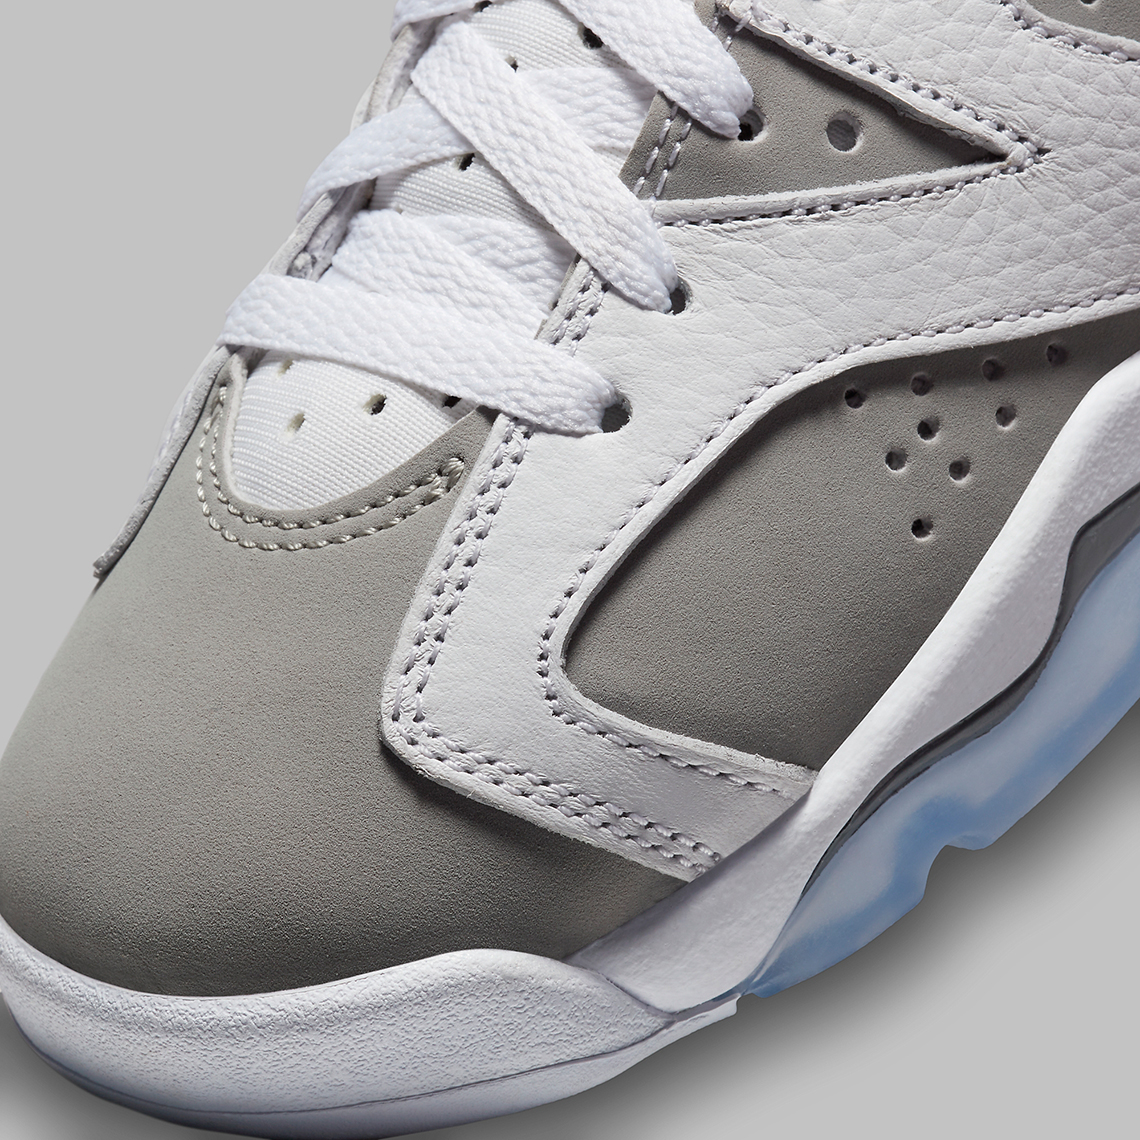 the Air Jordan Saint-GerSneaker 9 NRG Boot drops on Gs Cool Grey 384665 100 5